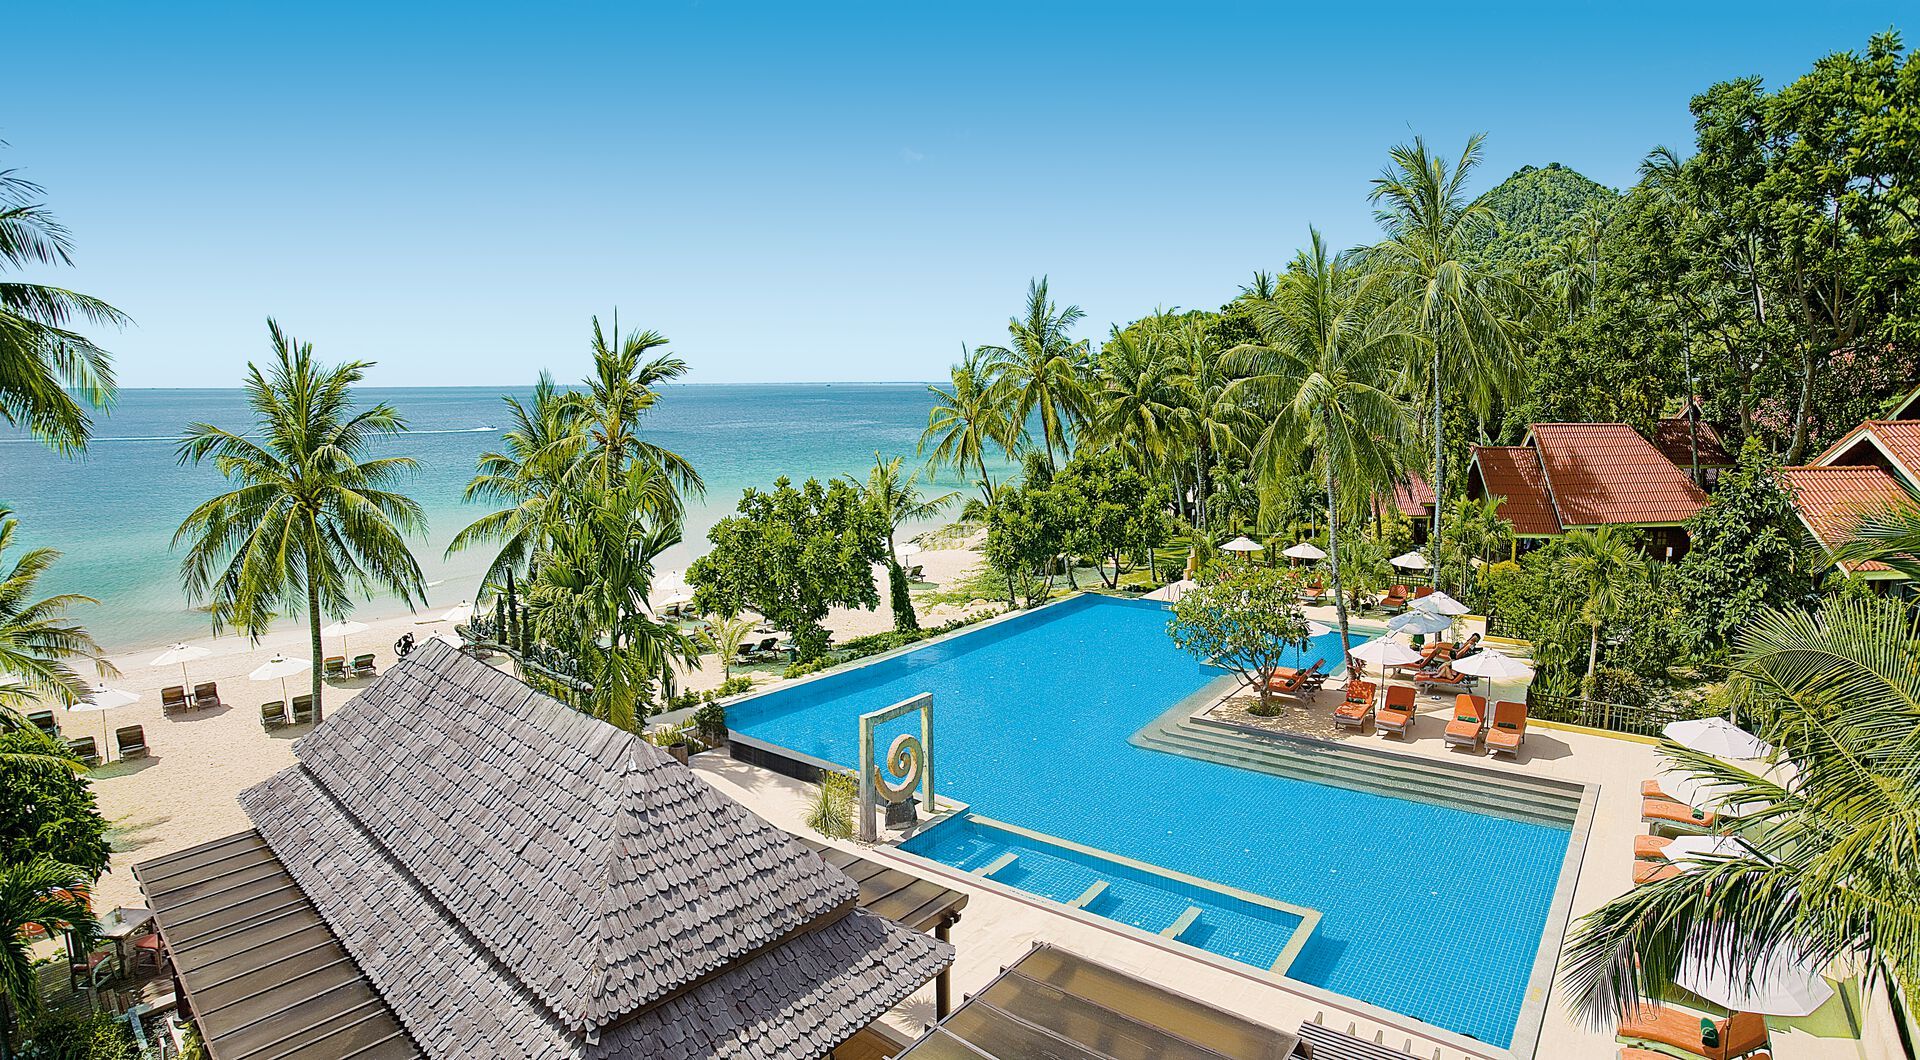 Thaïlande - Koh Samui - Hôtel New Star Beach Resort  - transfert privé inclus - 4*